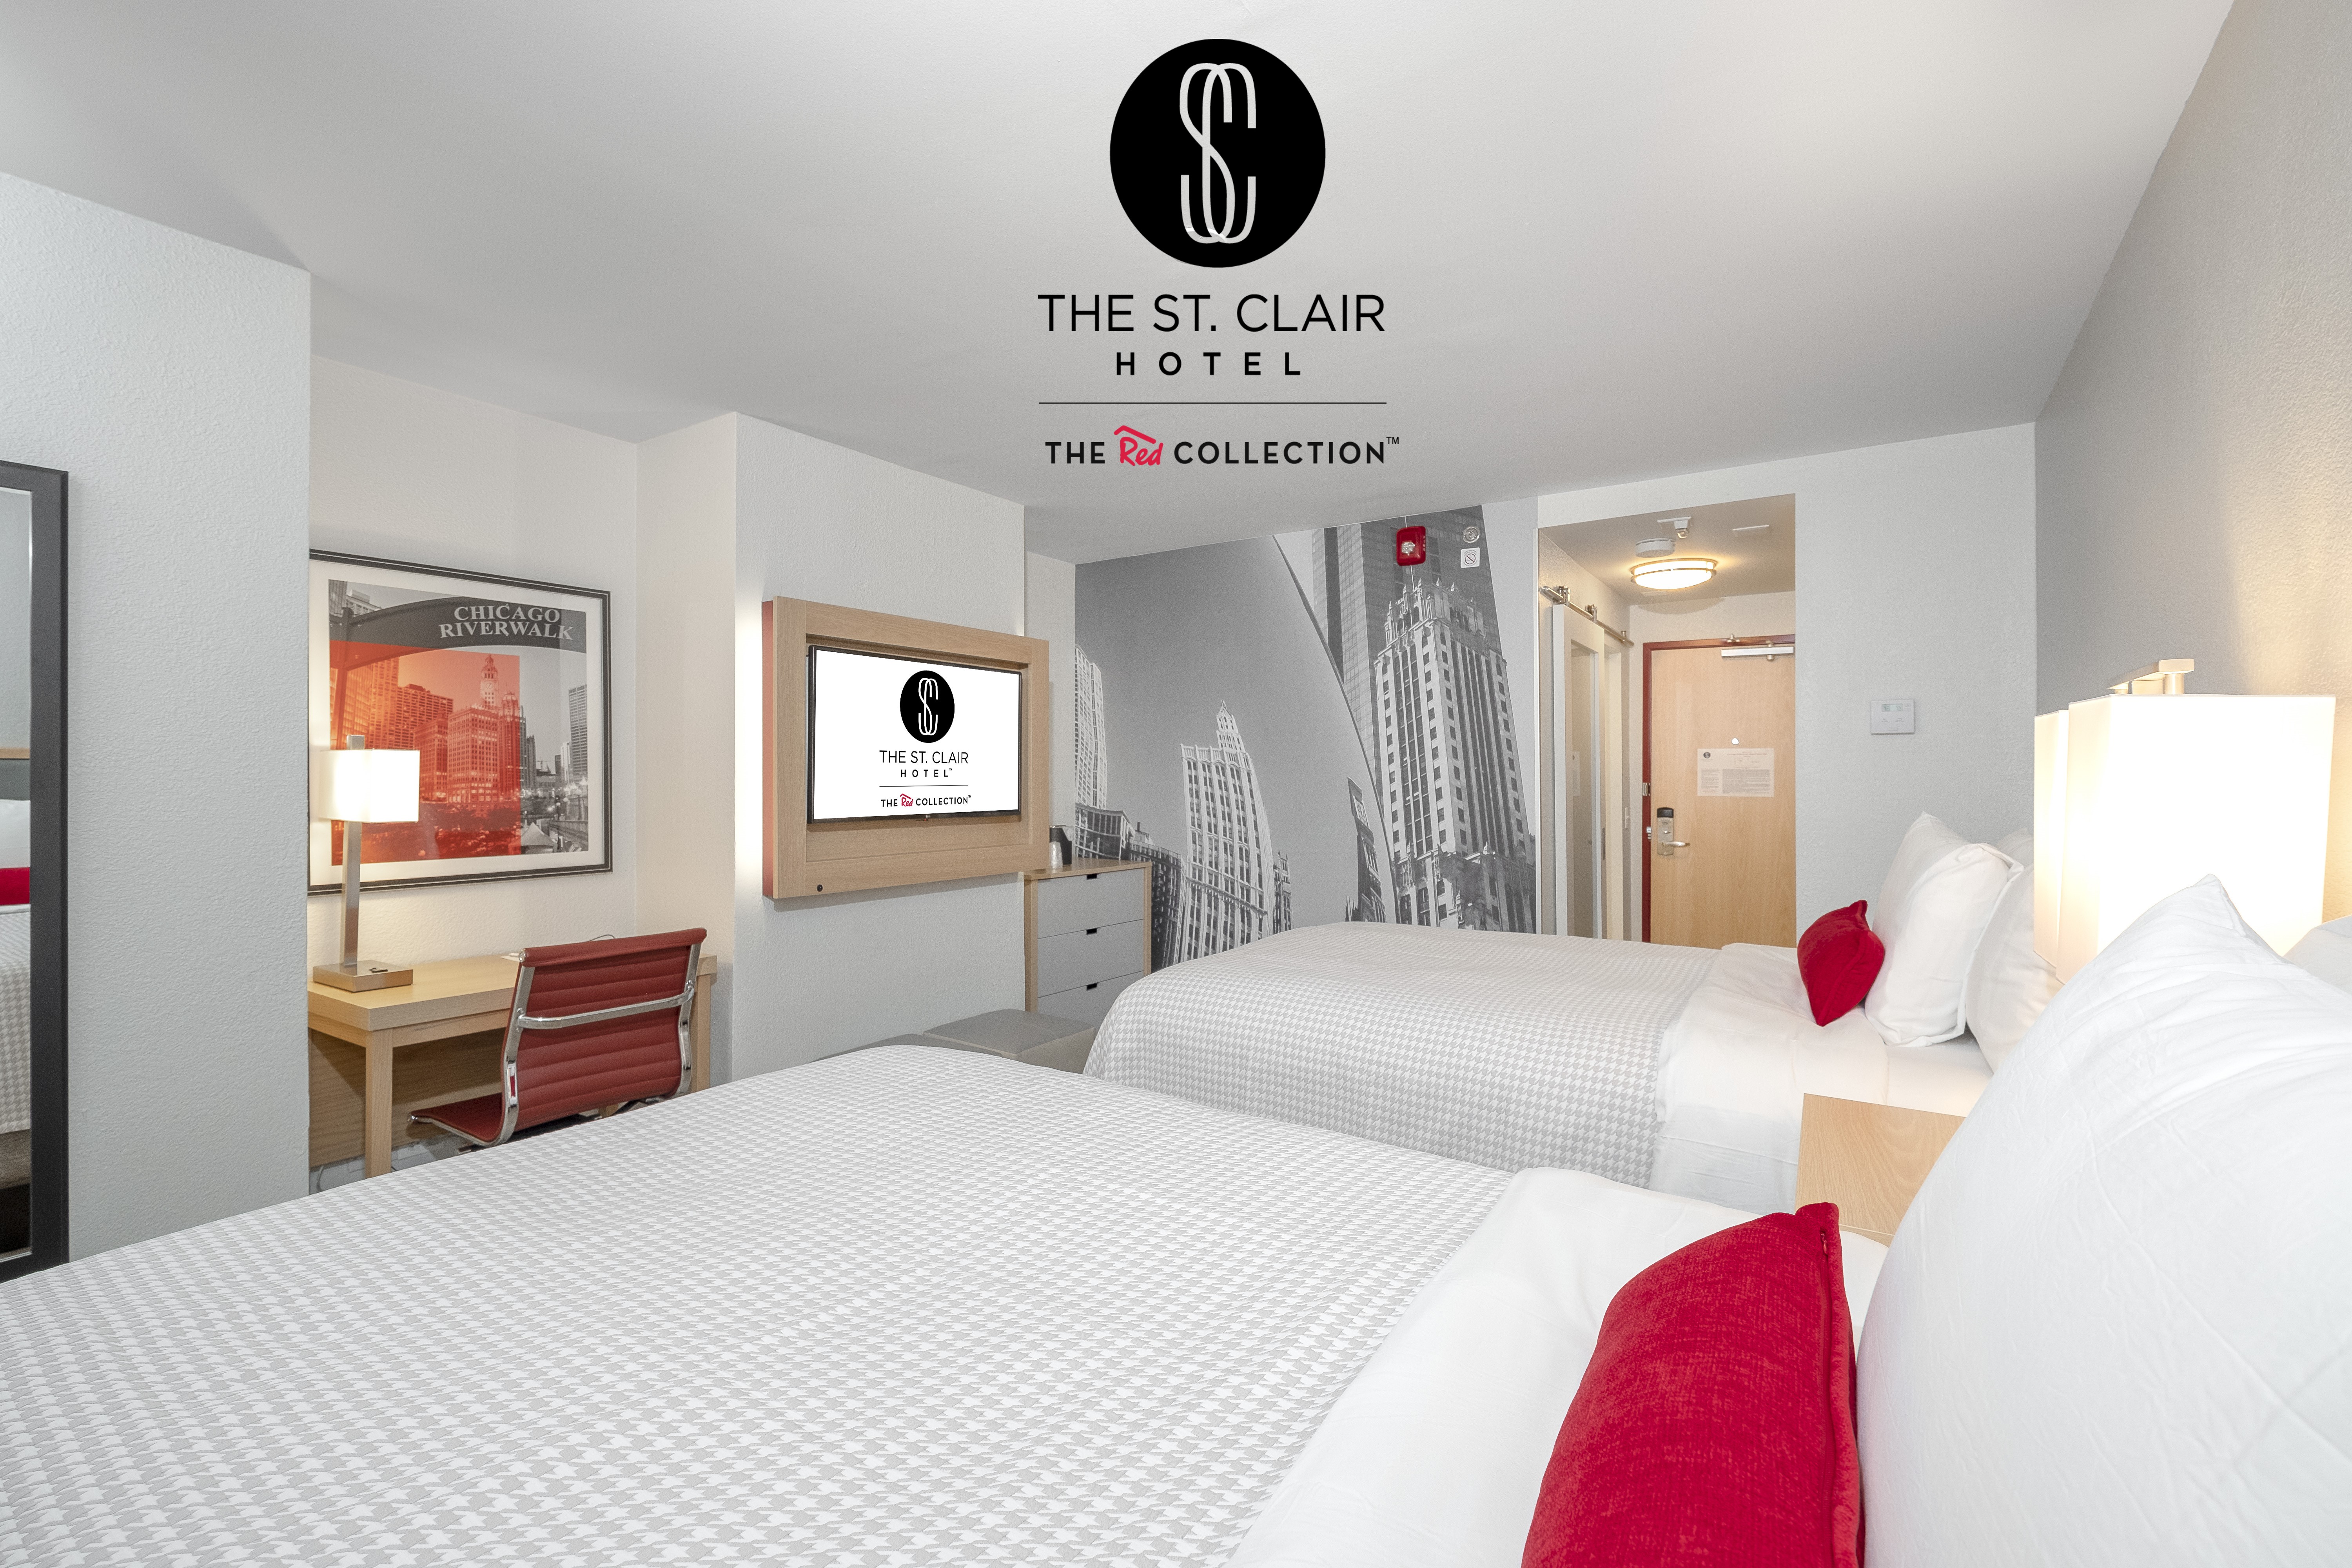 The St. Clair Hotel - Magnificent Mile - Chicago, IL 60611 - (312)787-3580 | ShowMeLocal.com